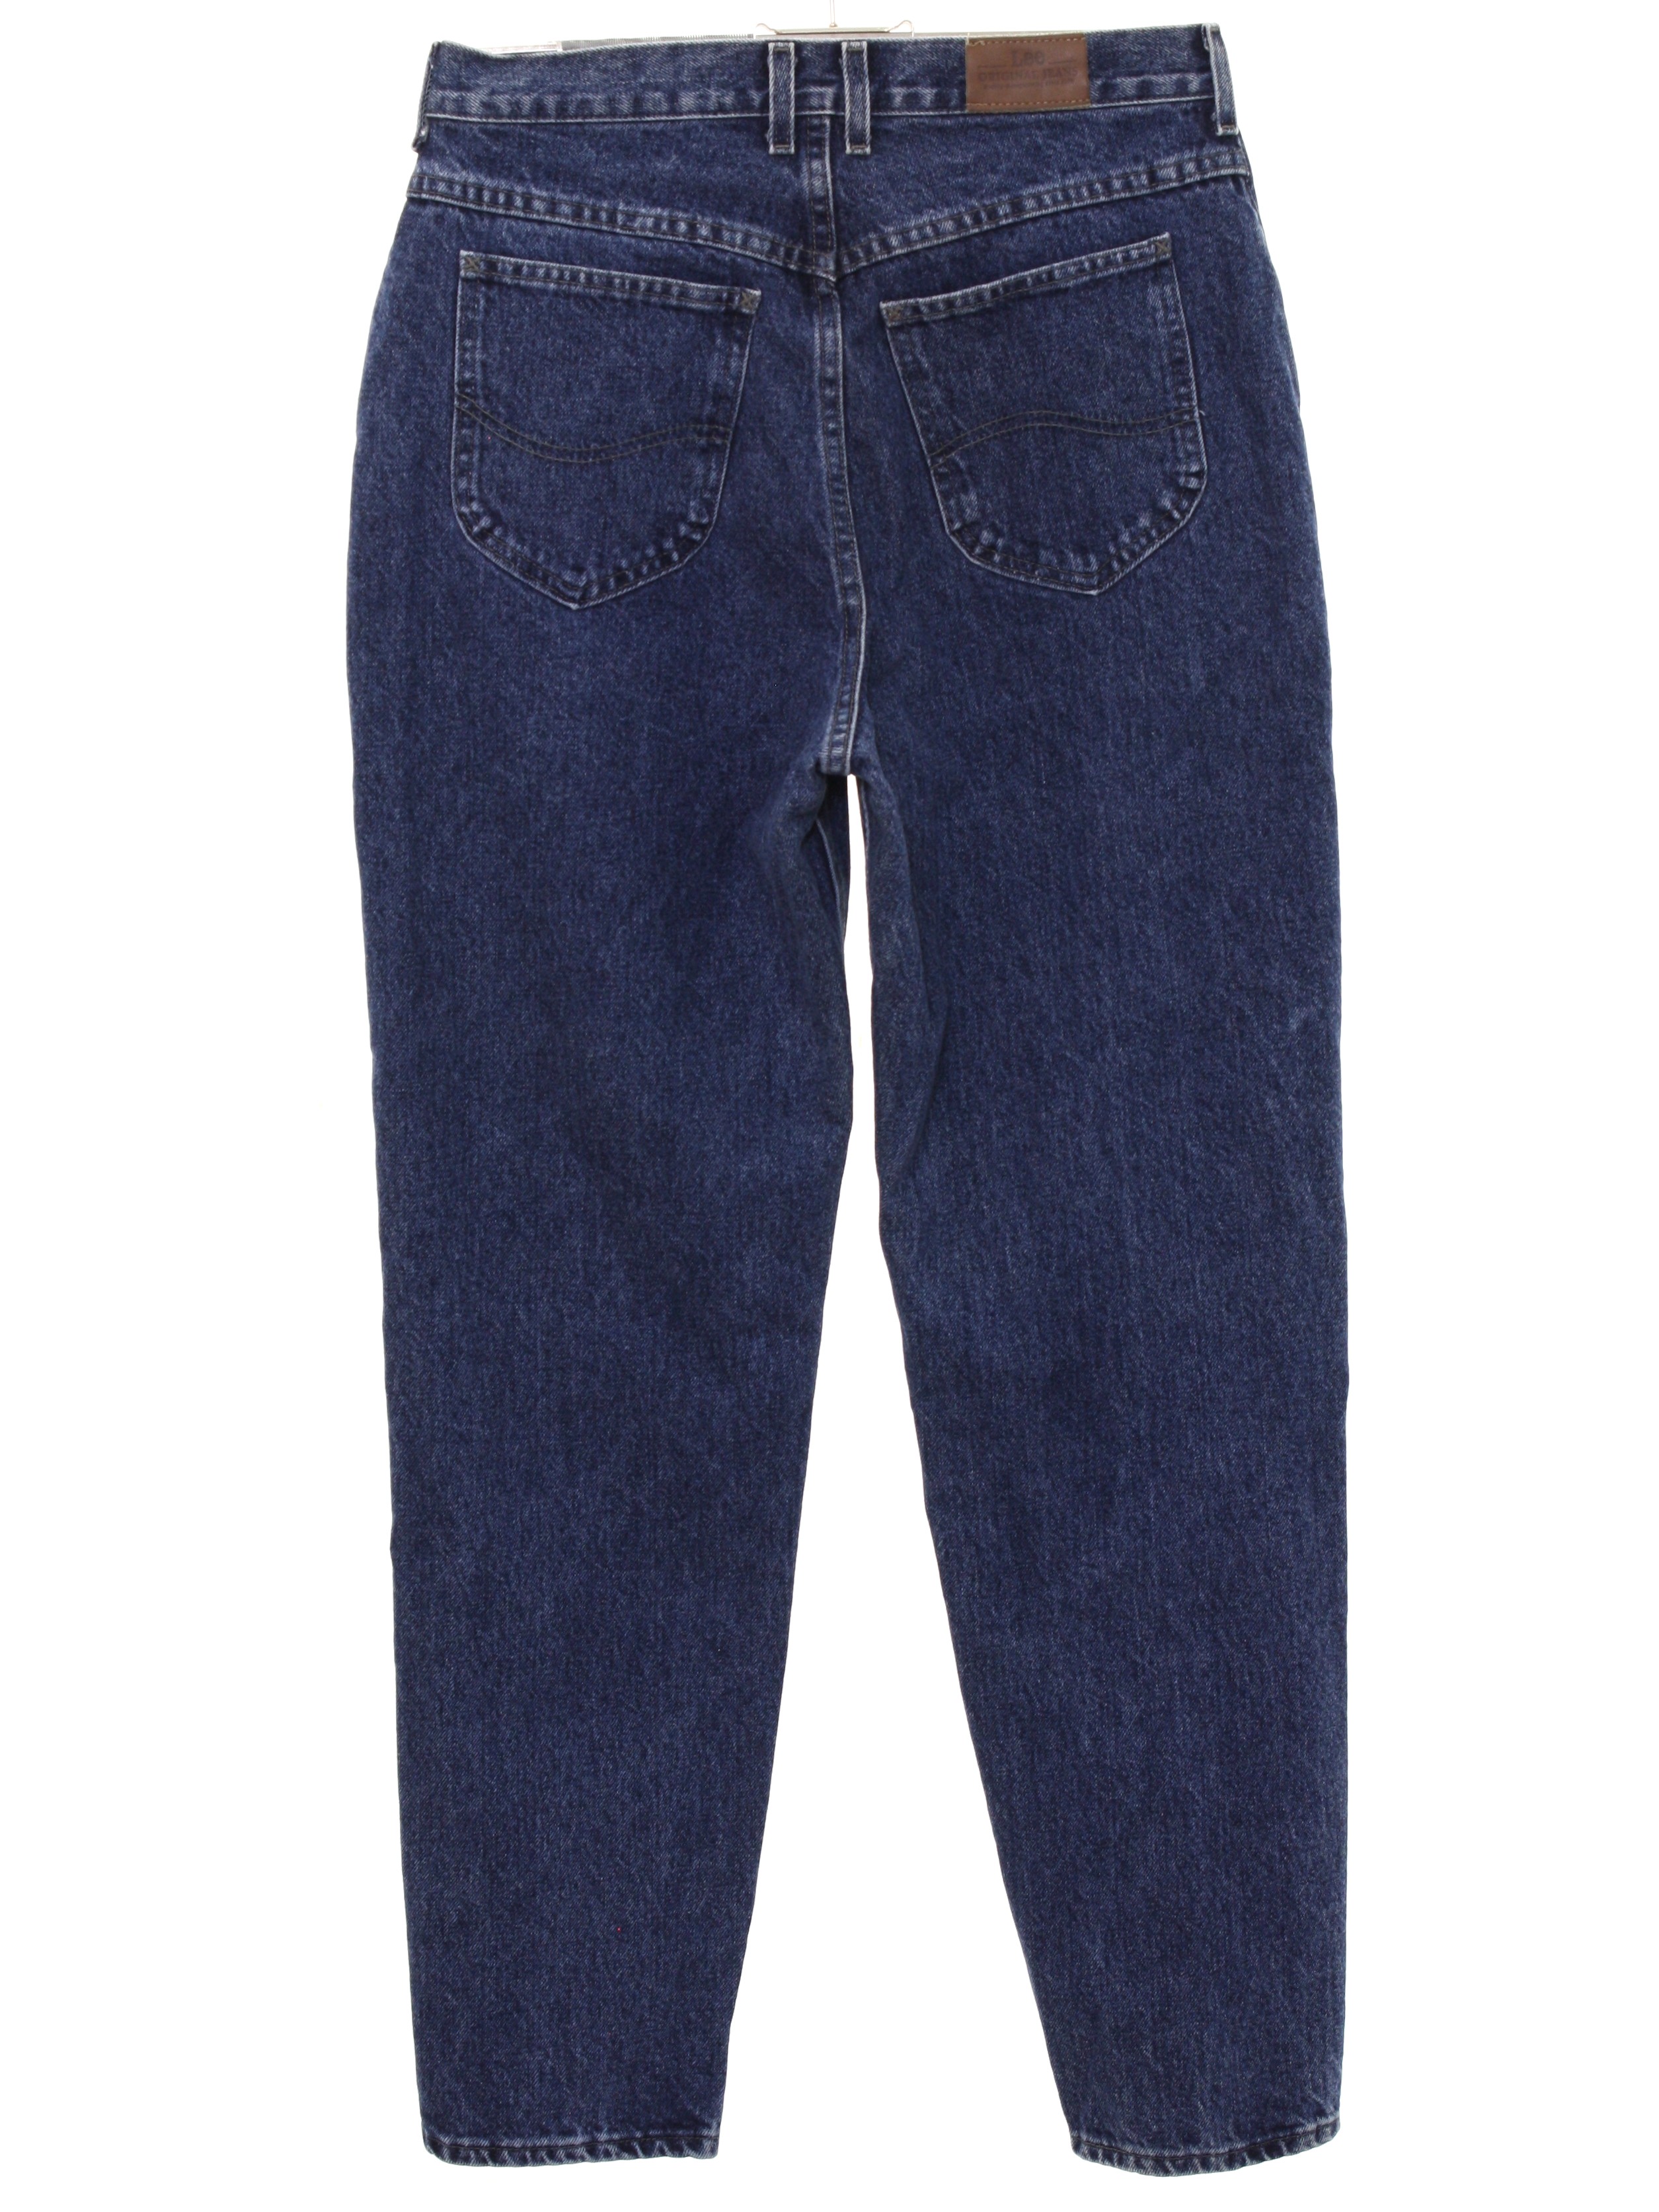 Vintage 90s Pants: 90s -Lee Original Jeans- Womens stone washed dark ...